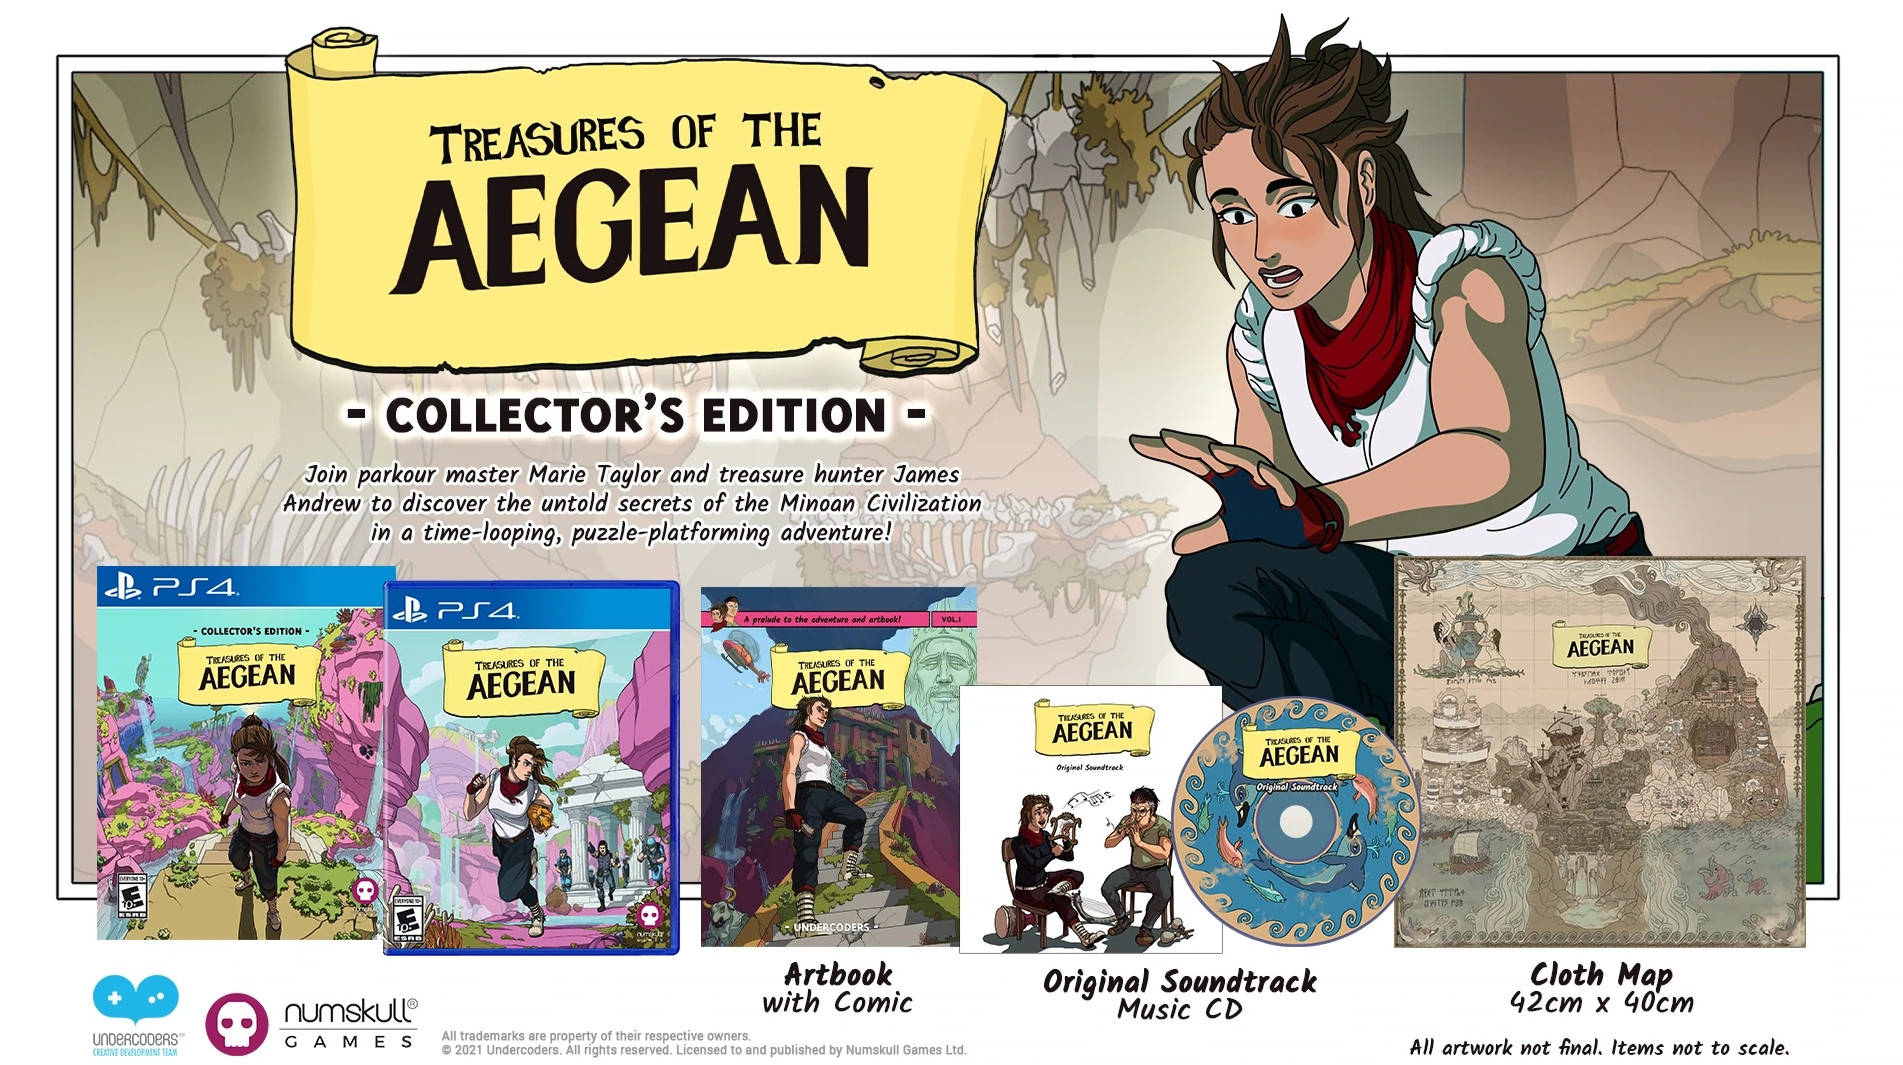 Treasures of the Aegean - Collector's Edition